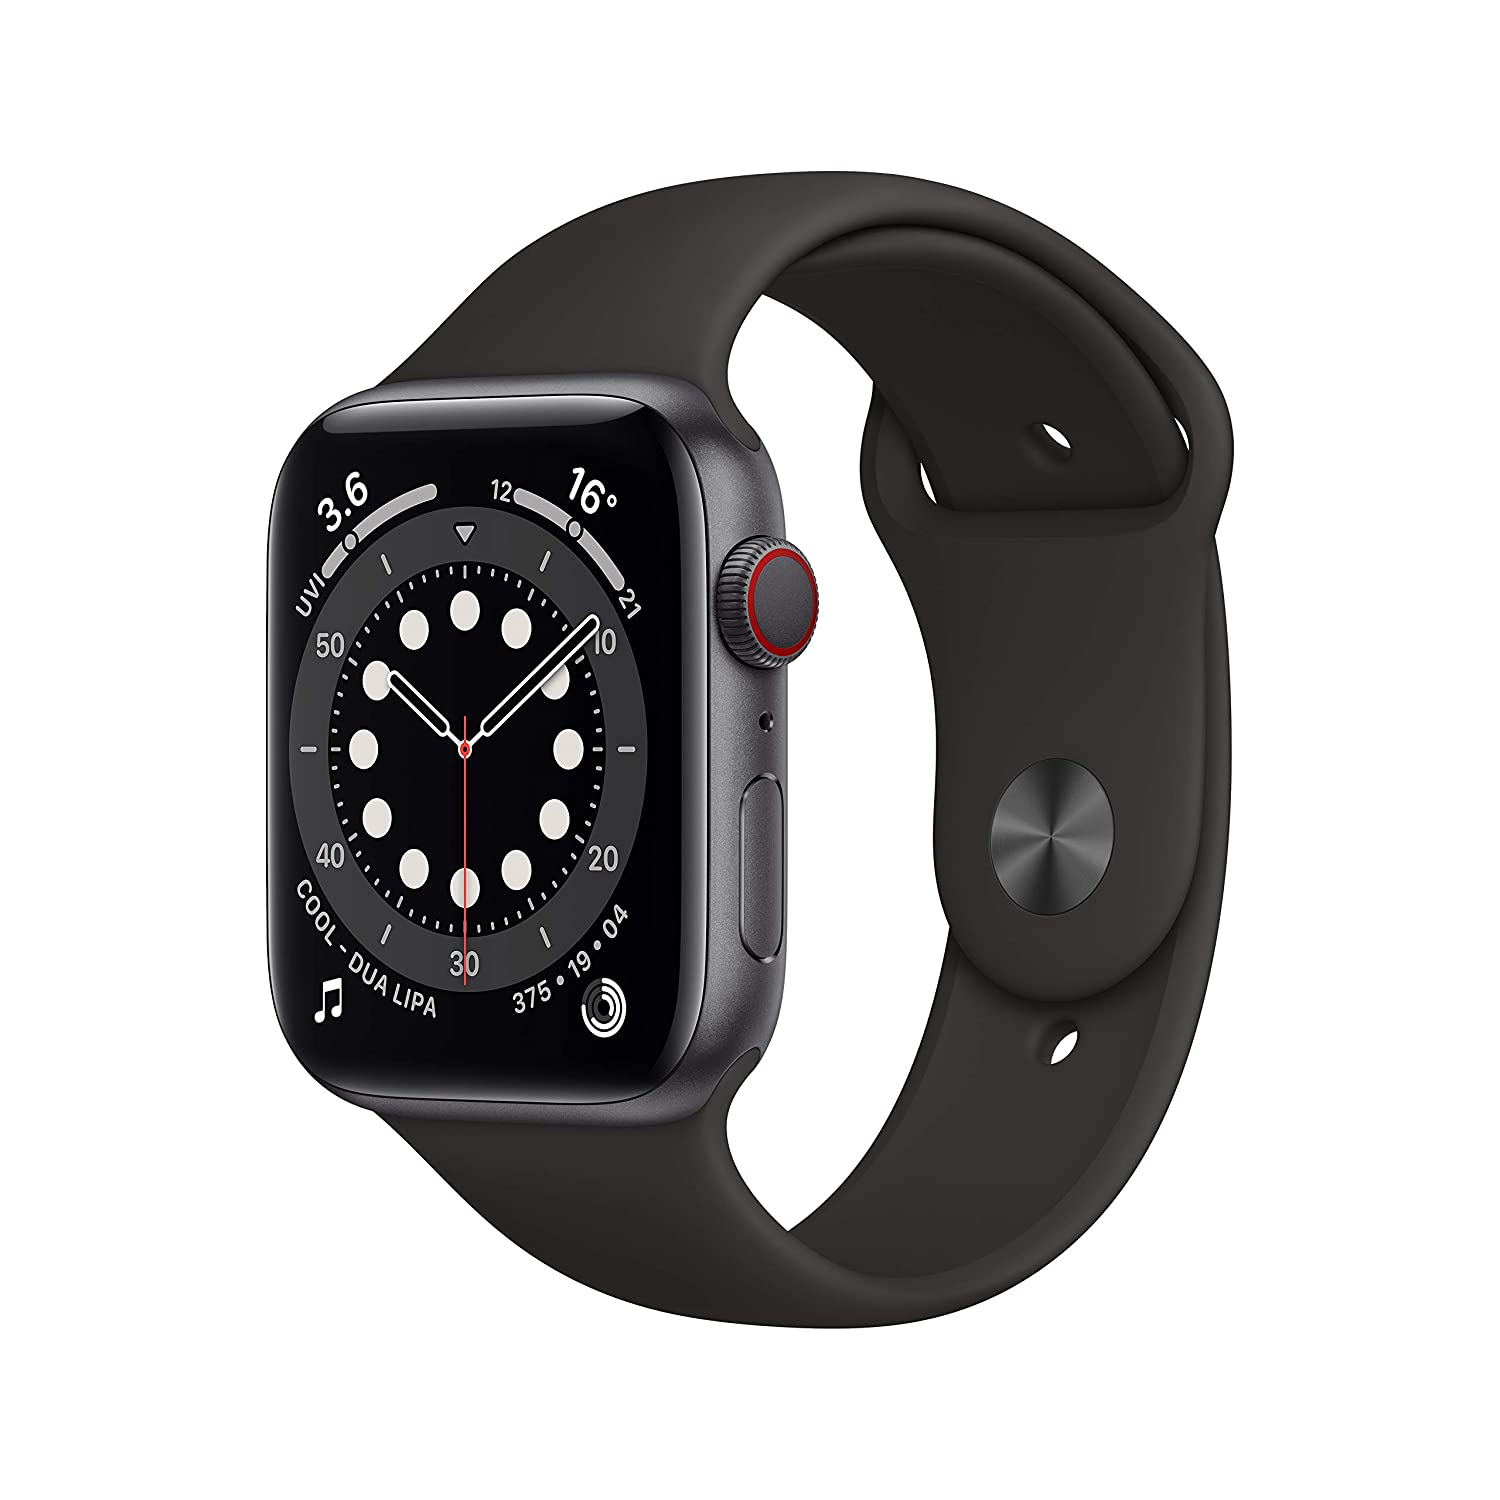 New Apple Watch Series 6 (GPS + Cellular, 44mm) 